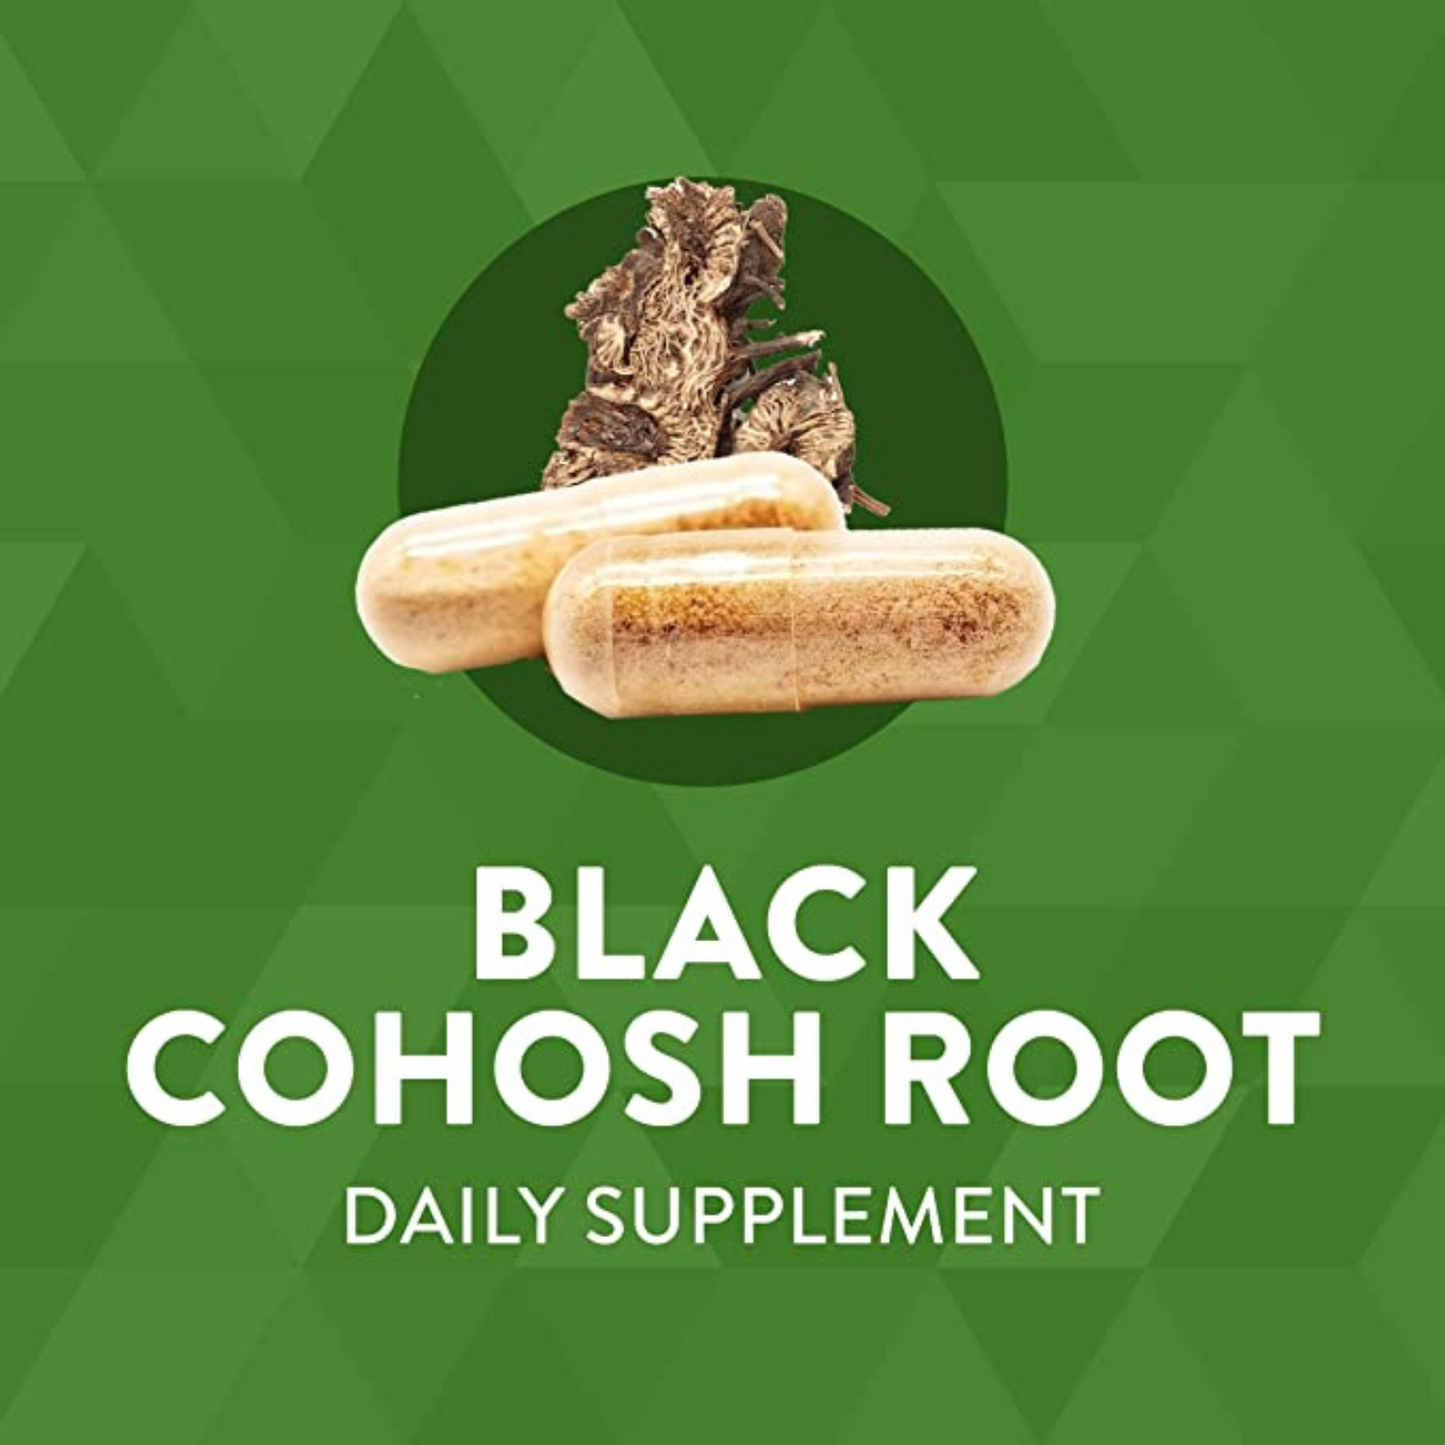 Nature's Way - Black Cohosh Root 540 Mg. - 180 Capsules